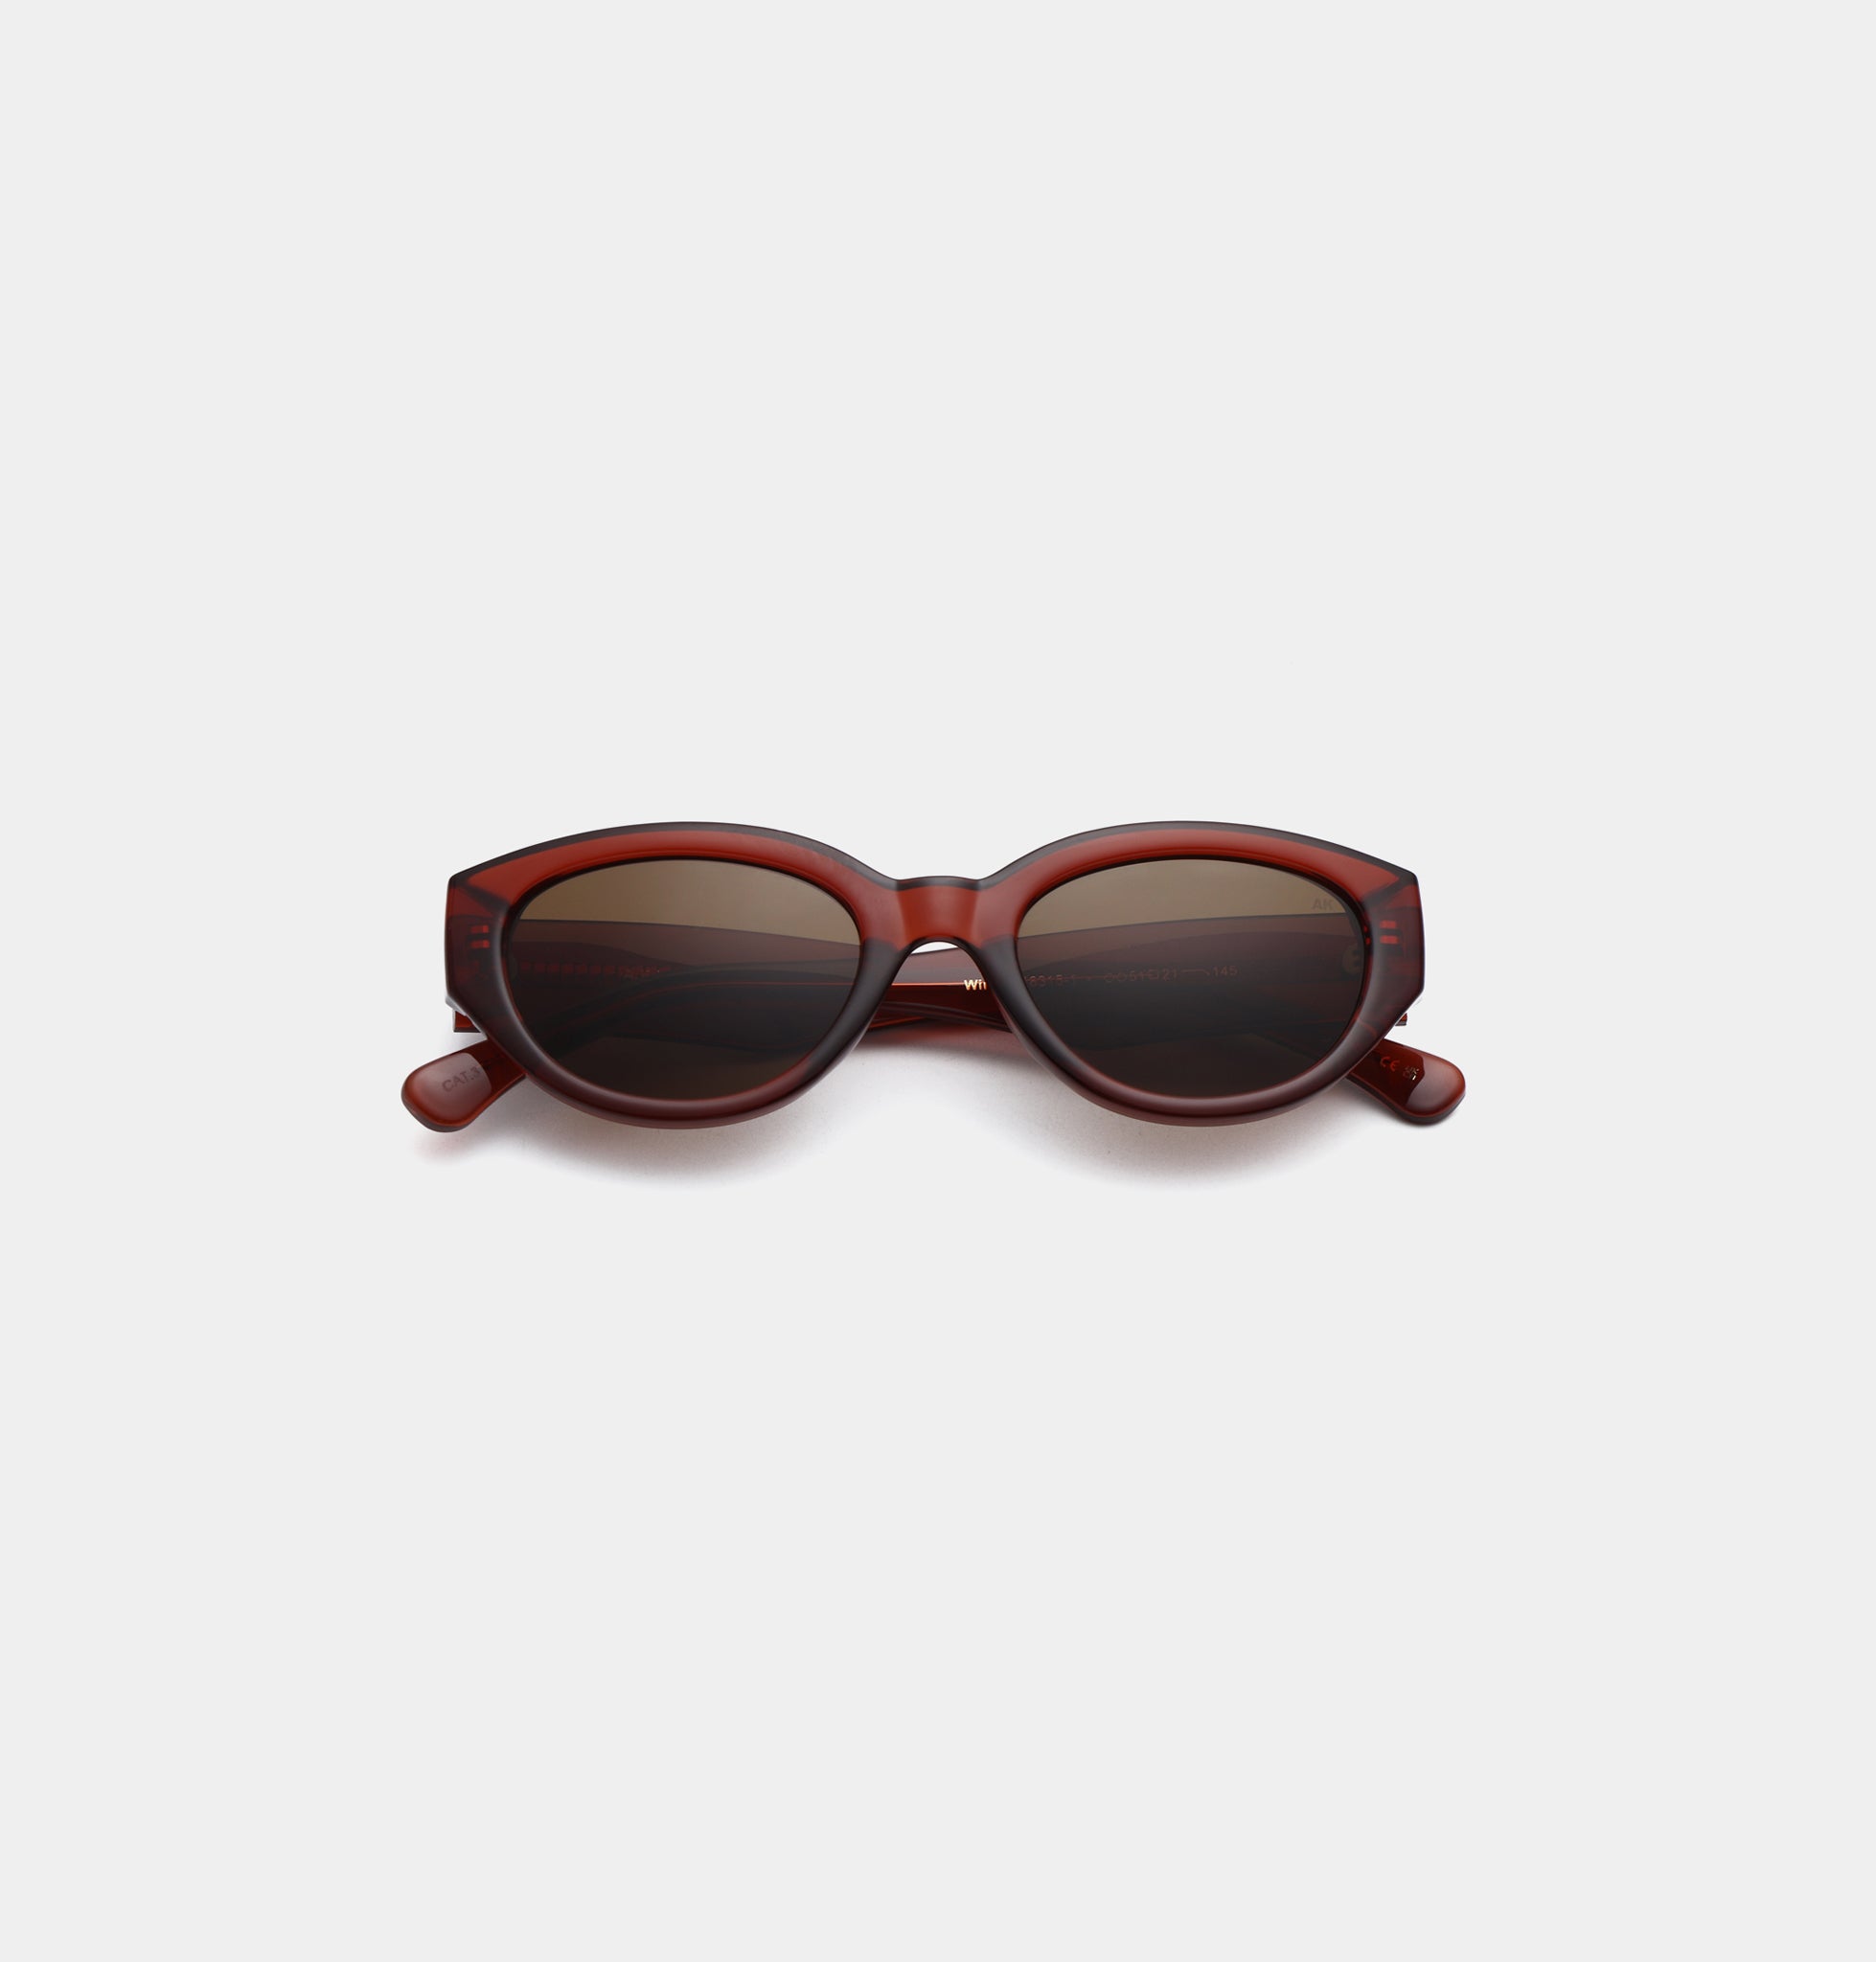 Winnie sunglasses in brown